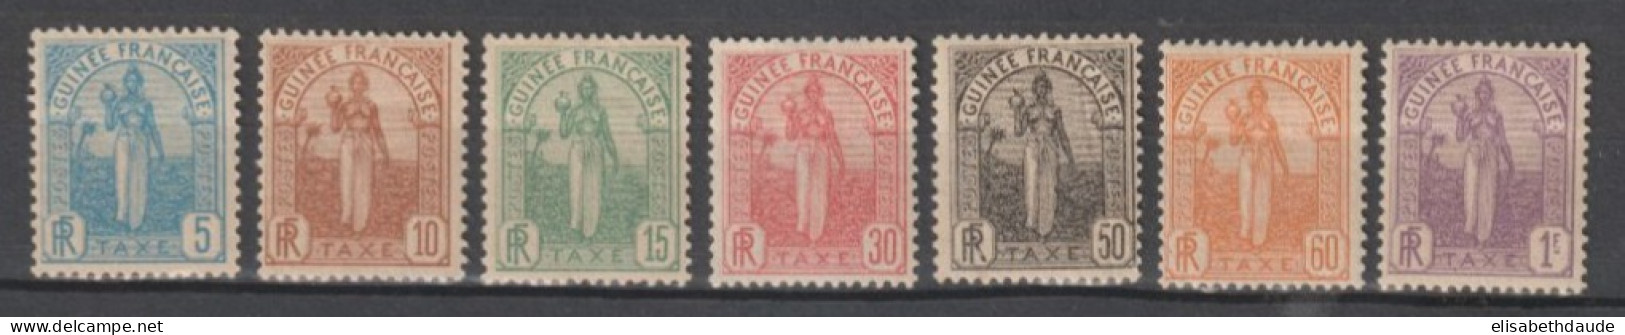 GUINEE - 1905 - SERIE TAXE COMPLETE YVERT N°1/7 * MH - COTE = 106 EUR - Unused Stamps